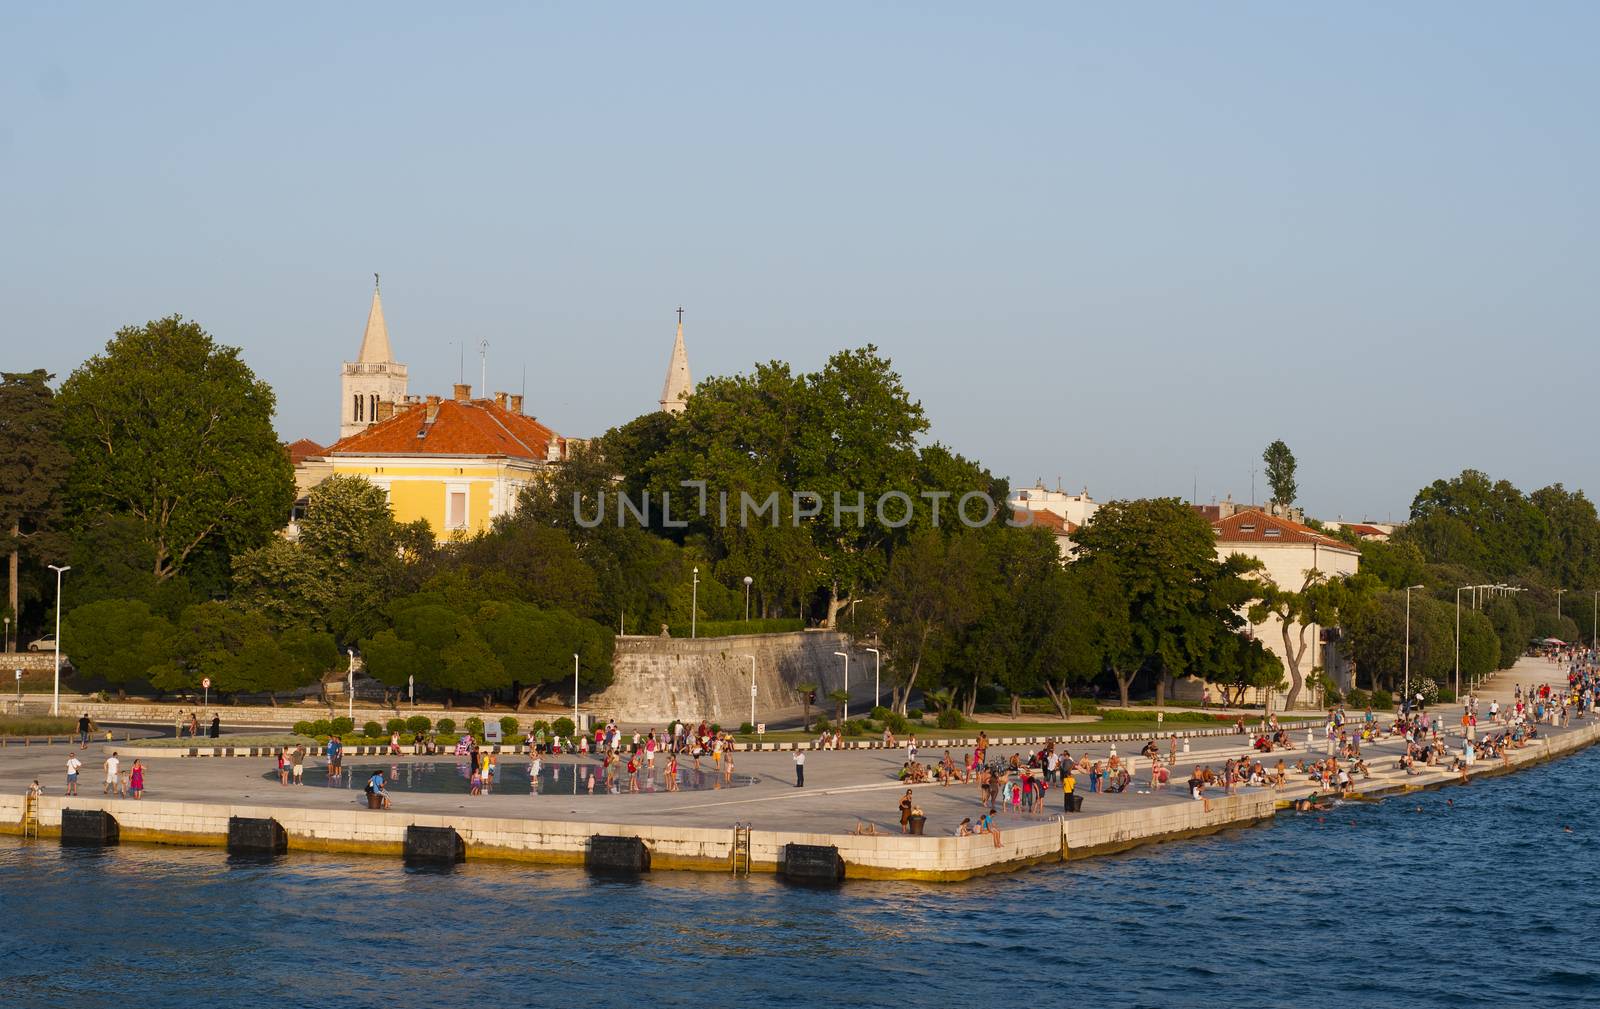 CROATIA, ZADAR - JULY 14, 2012: People walking along Adriatic sea, next tocircular solar panel urban installation "Greeting to the Sun"